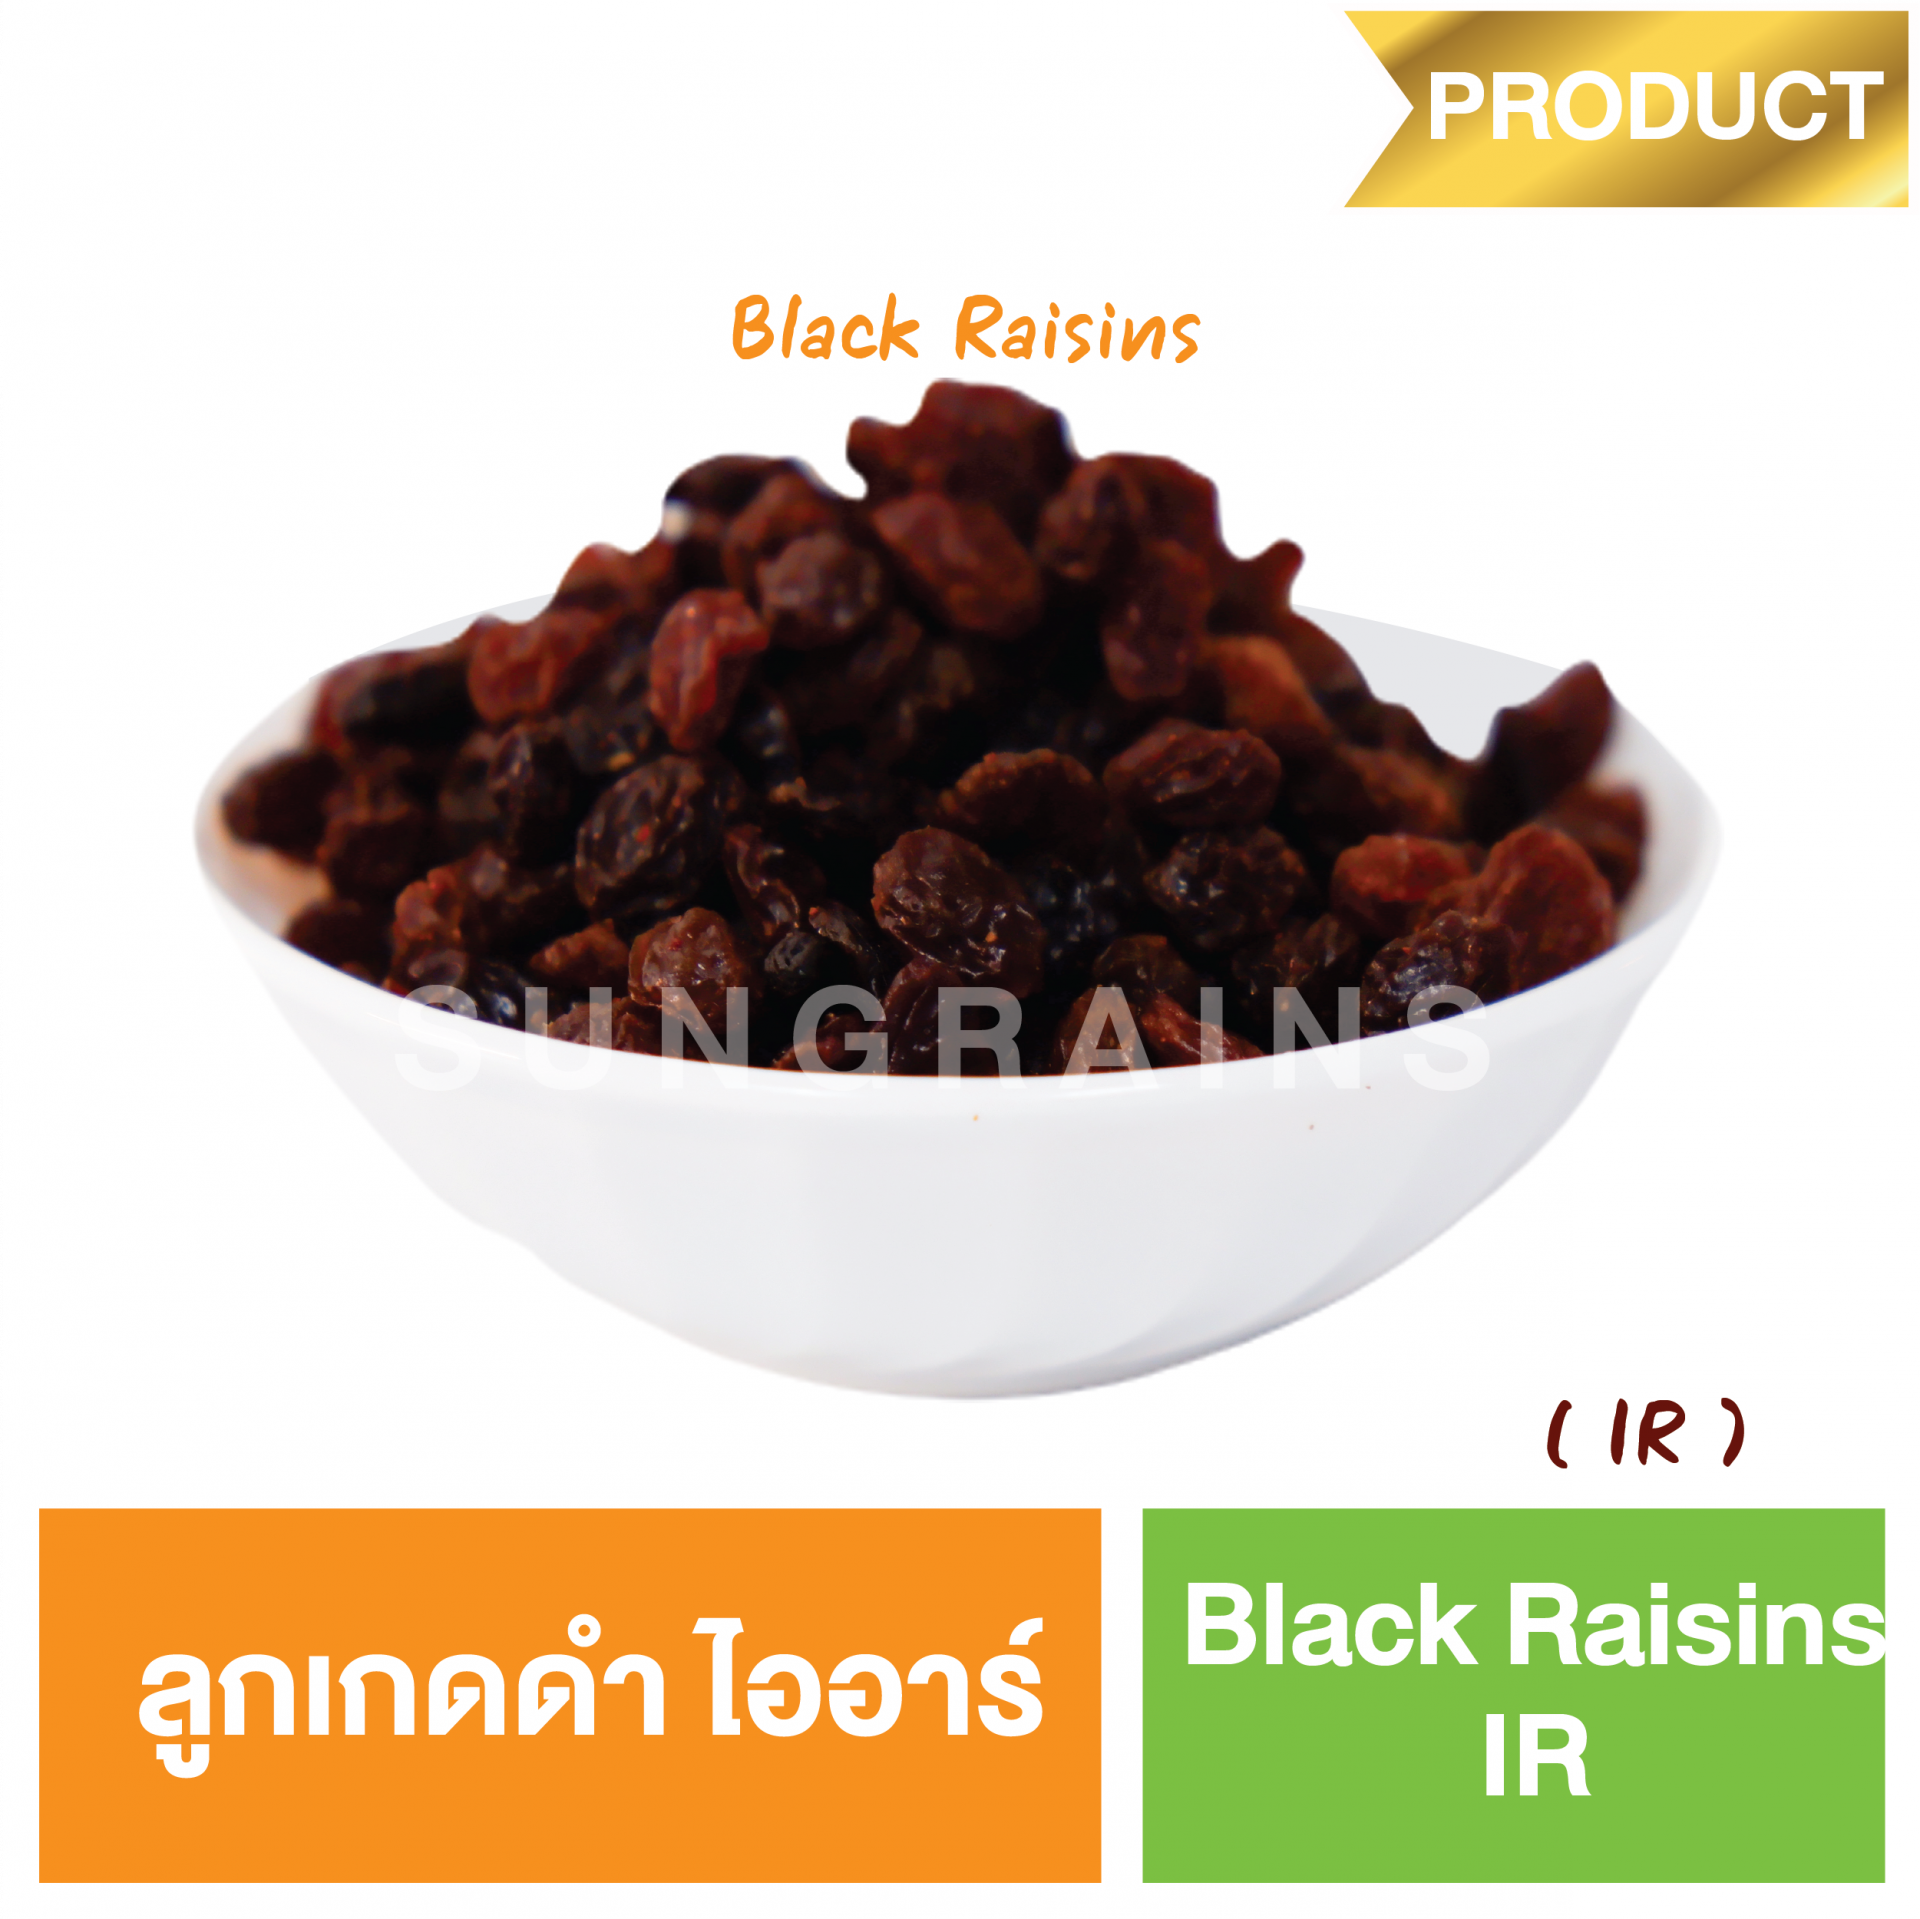 Black Raisins IR (Sungrains Brand)